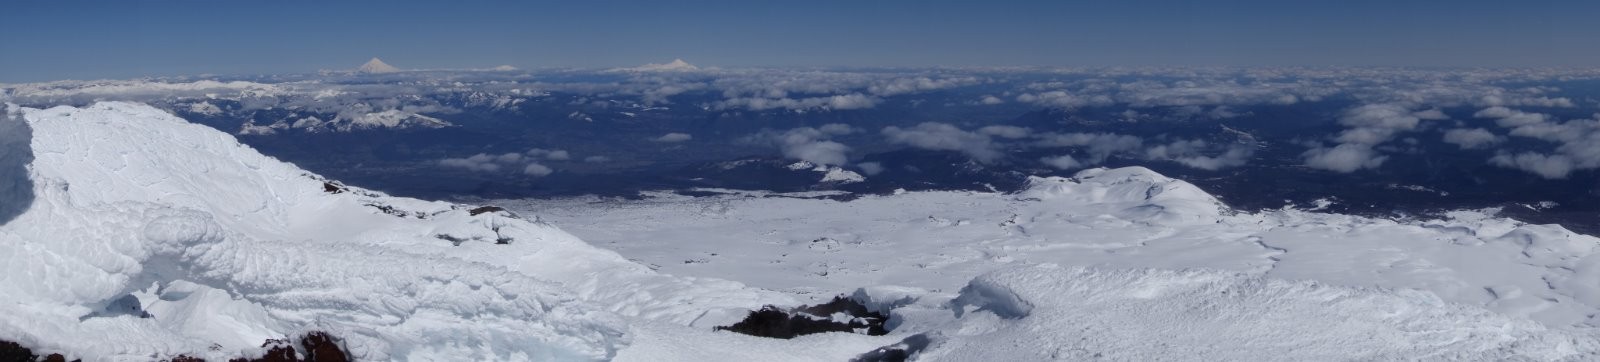 Panorama vers le Sud et notamment le volcan Villarica